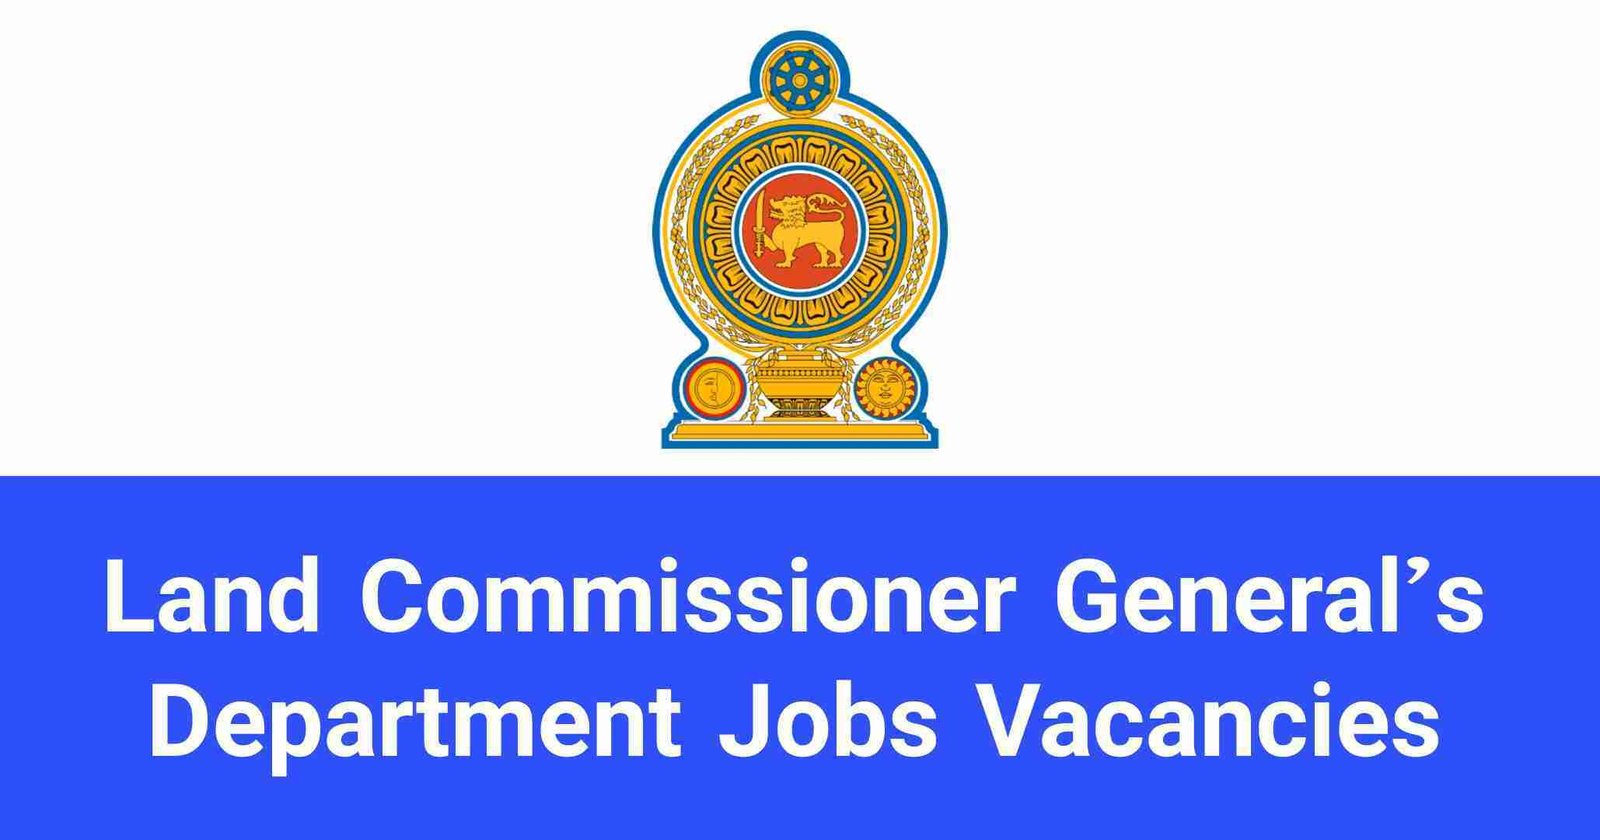 Land Commissioner General’s Department Jobs Vacancies